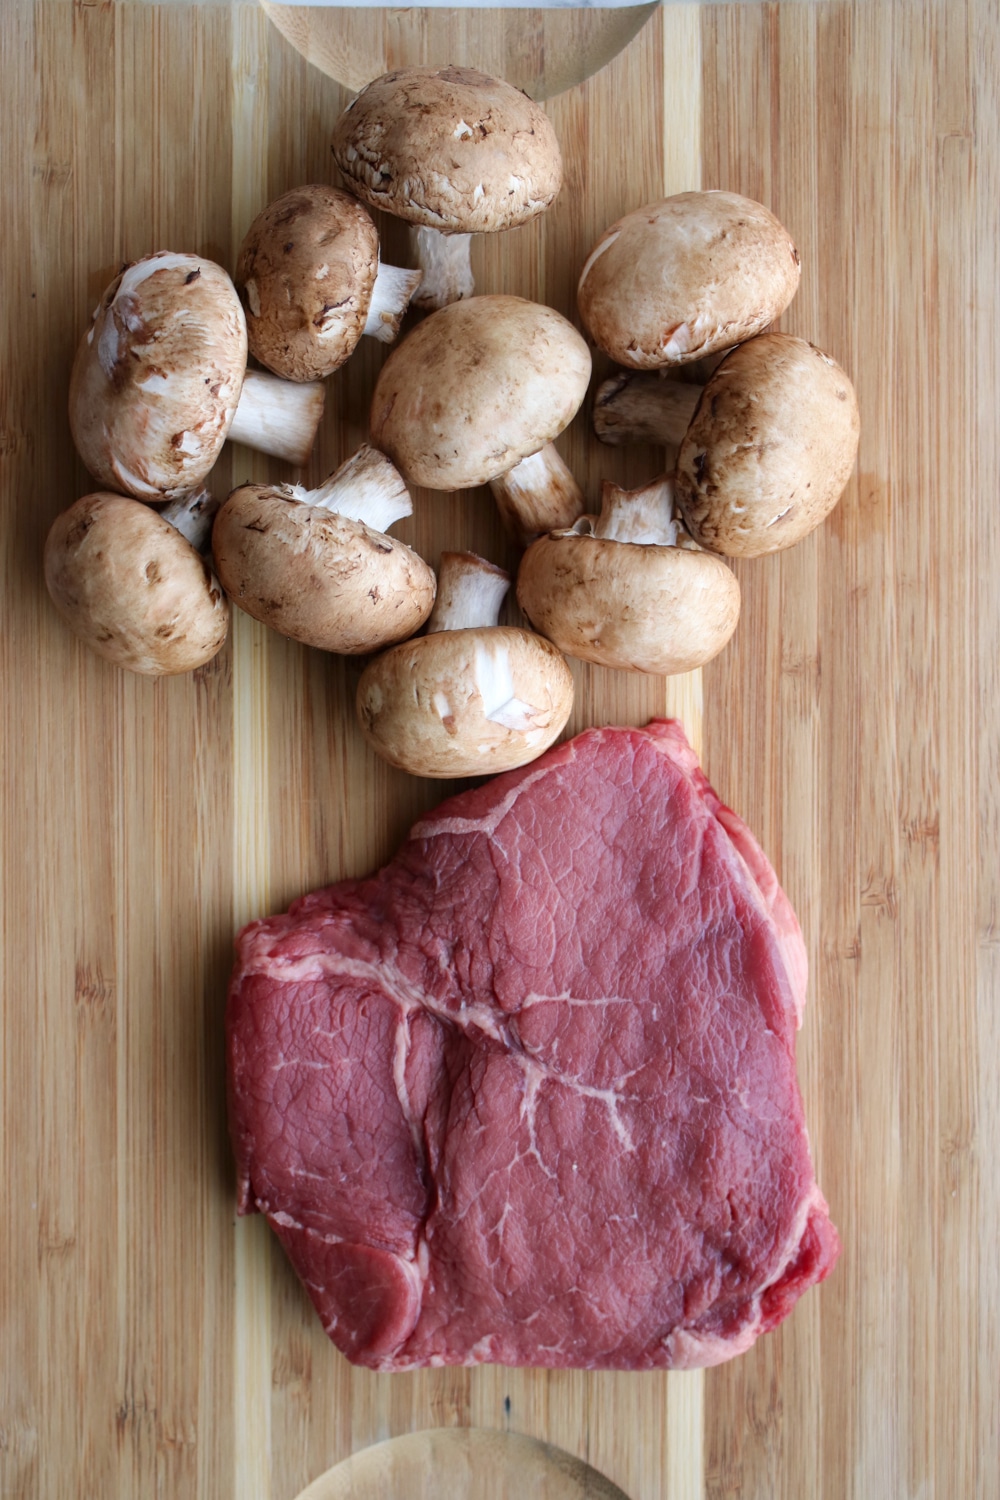 steak and mushrooms on a cutting board